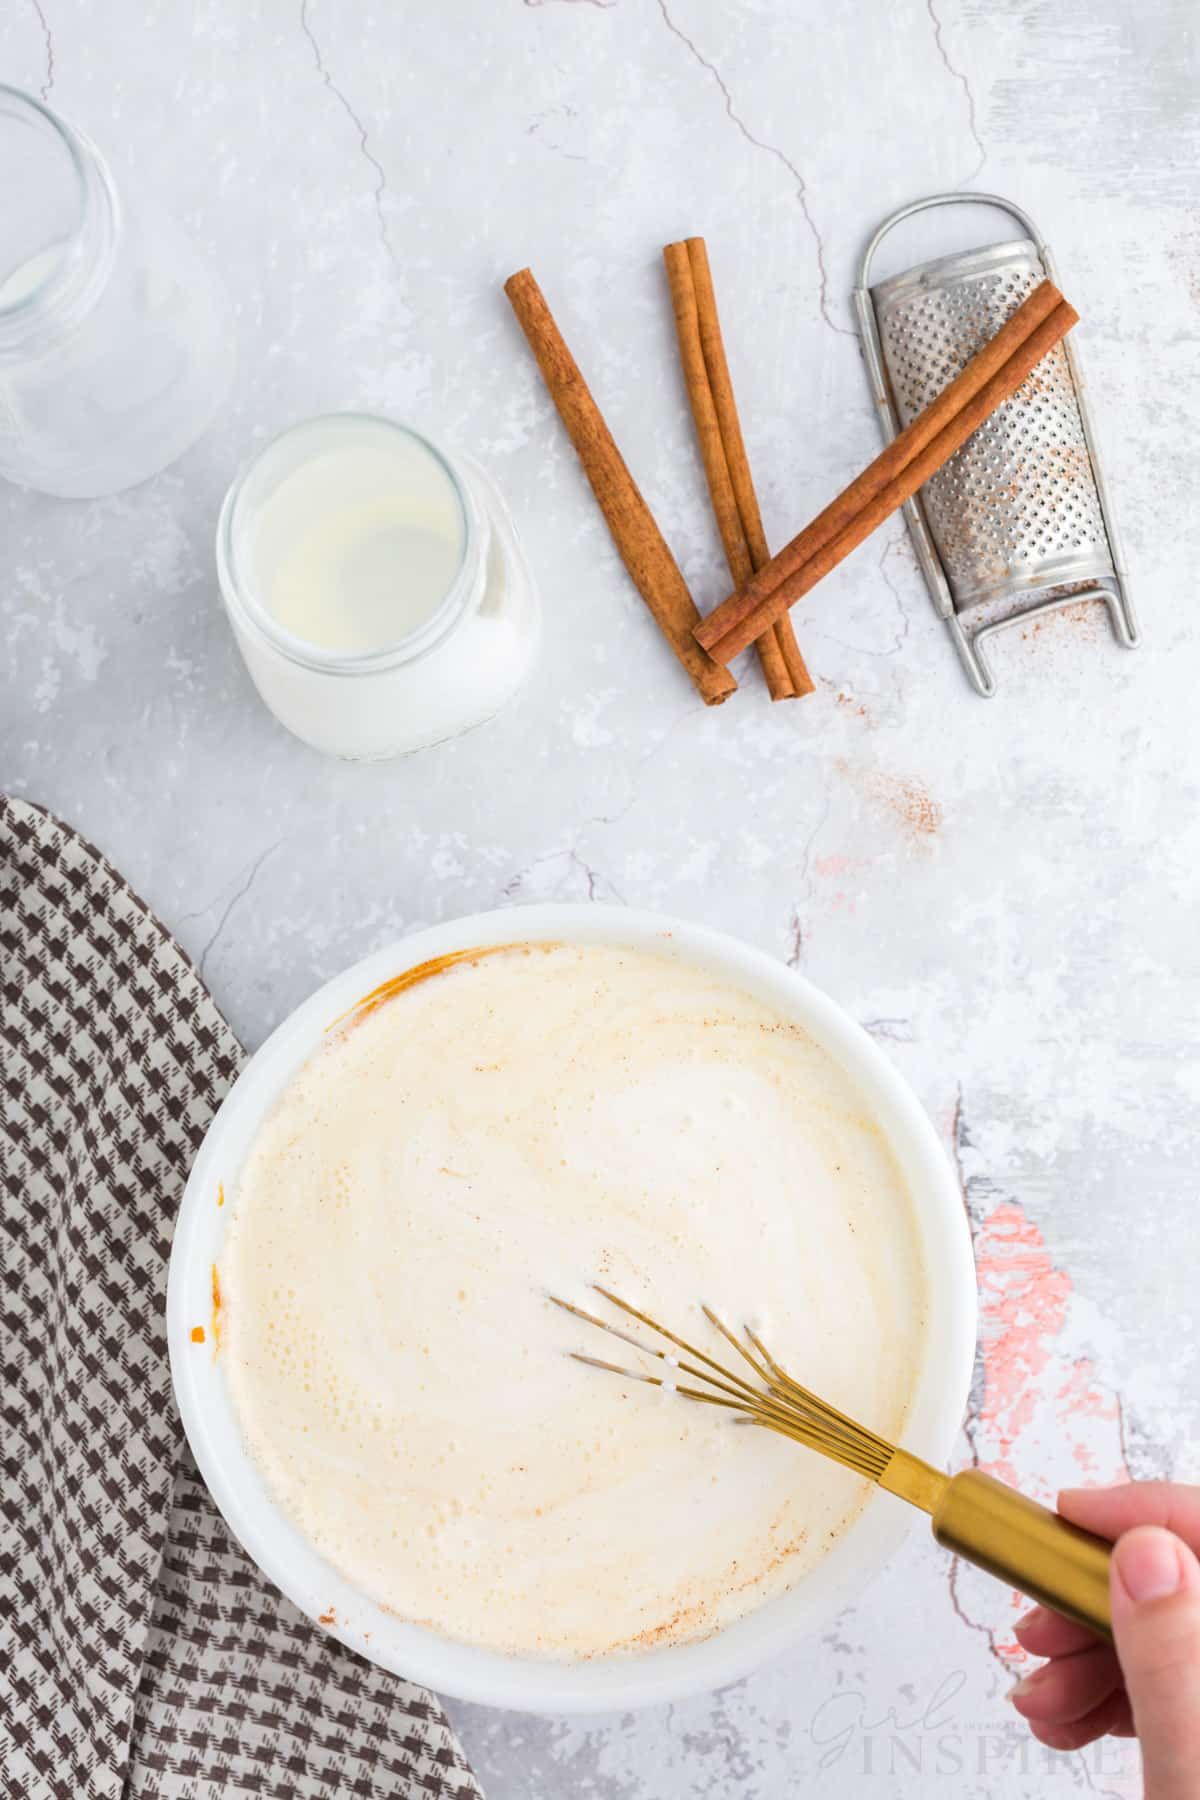 milk and cream being stirred into the pumpkin ice cream base.